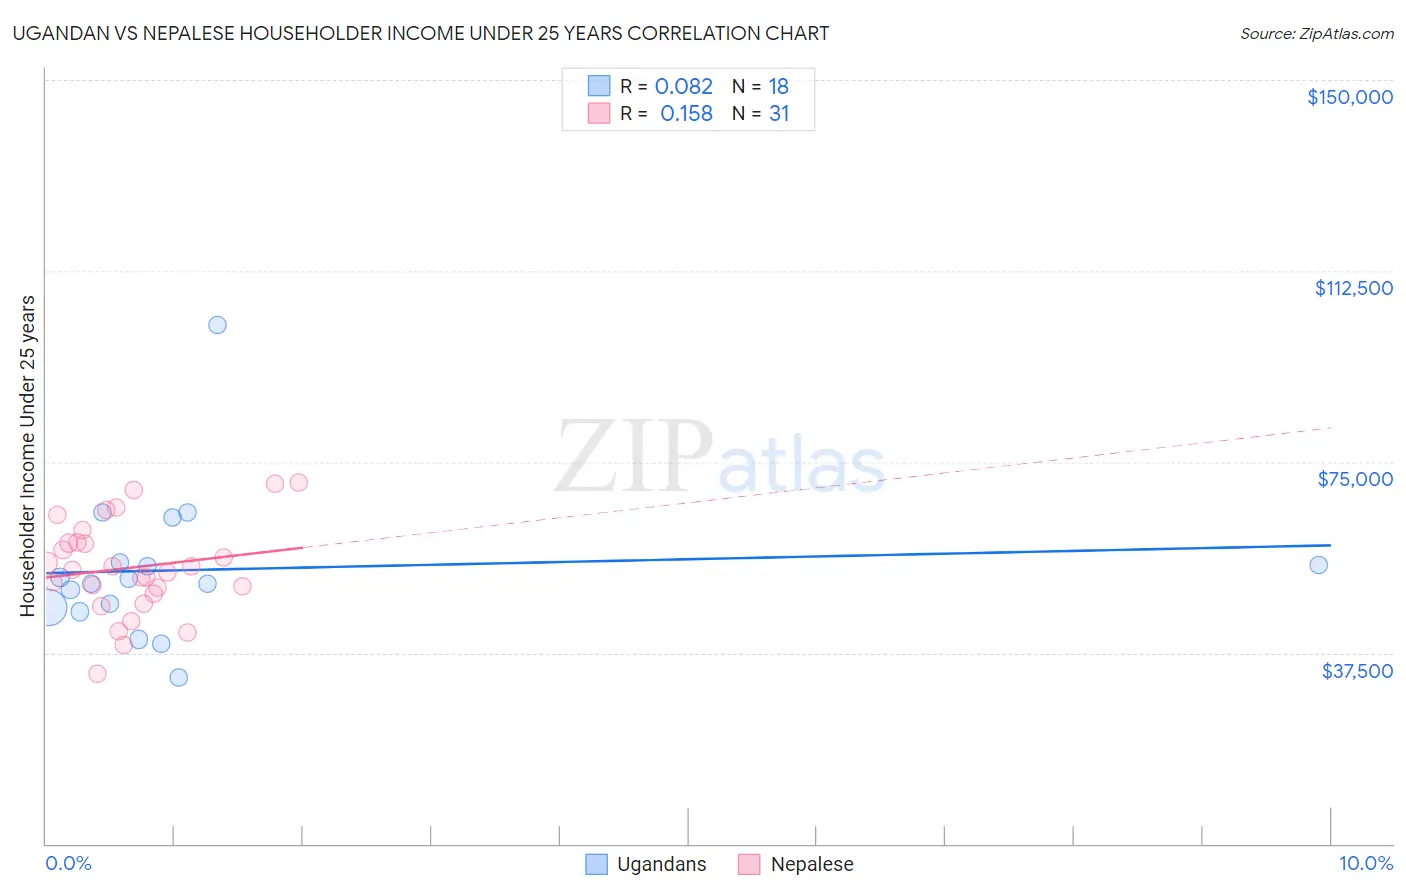 Ugandan vs Nepalese Householder Income Under 25 years